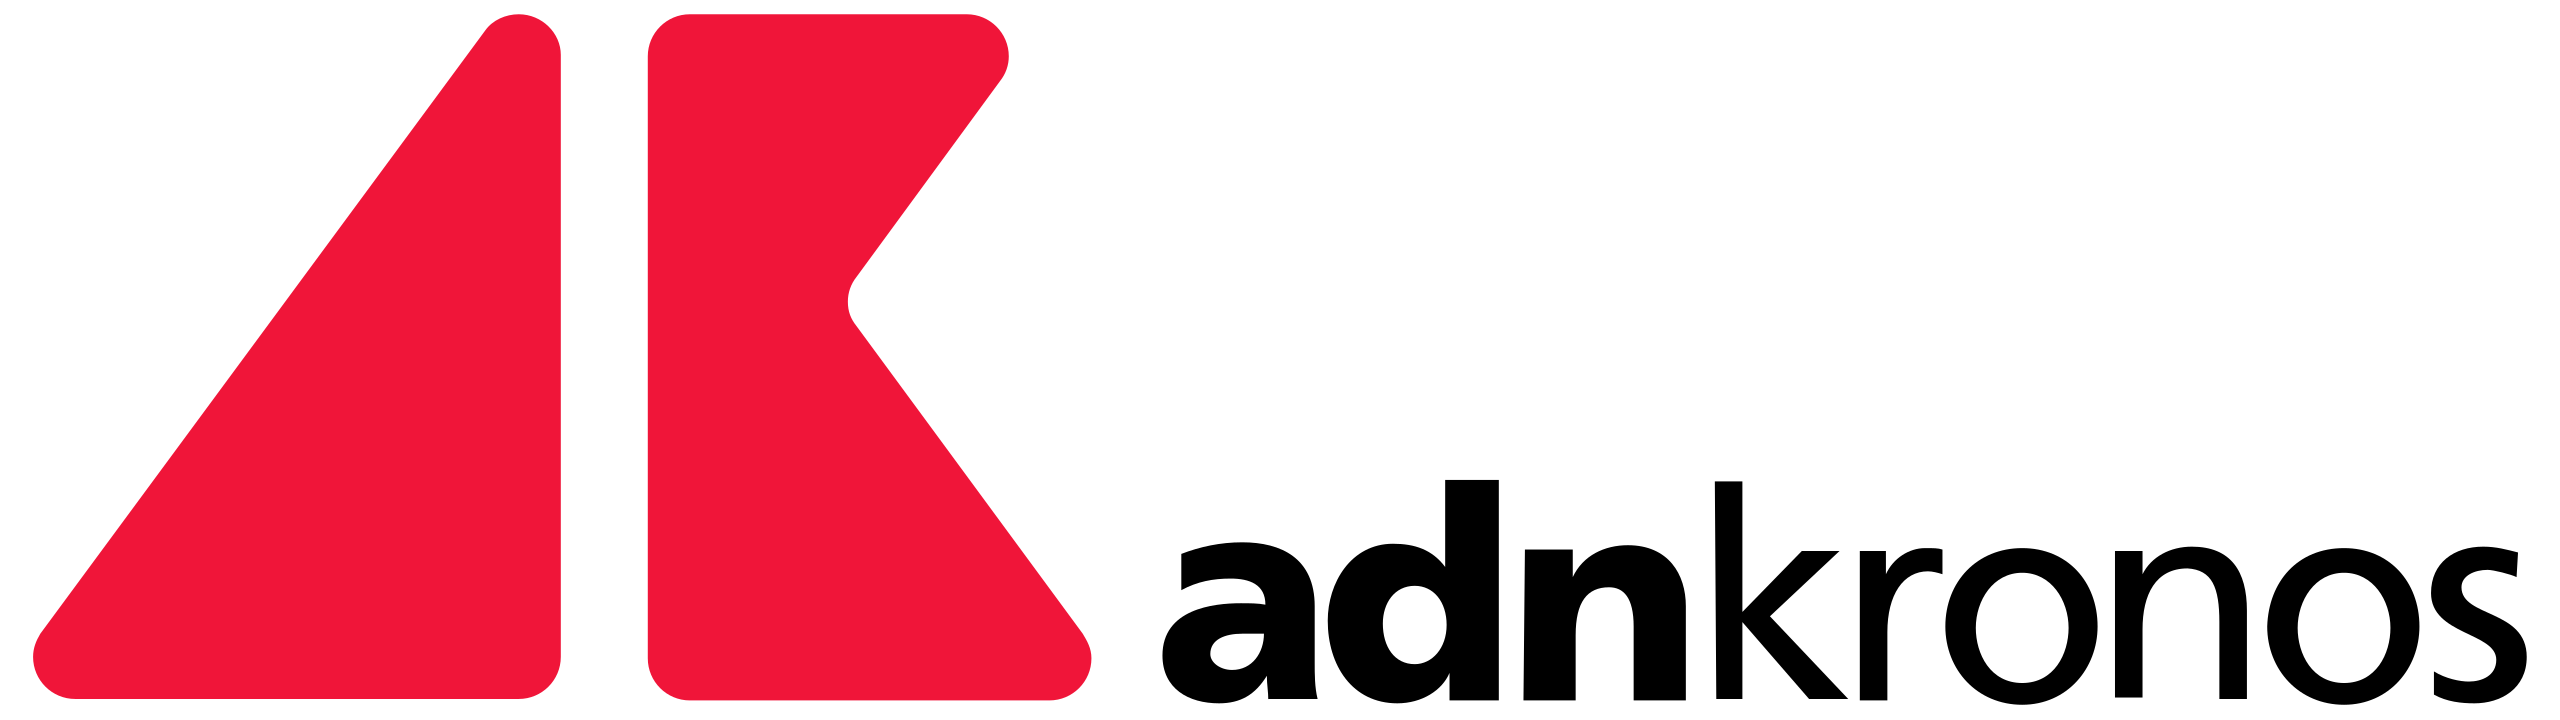 Adnkronos_Logo